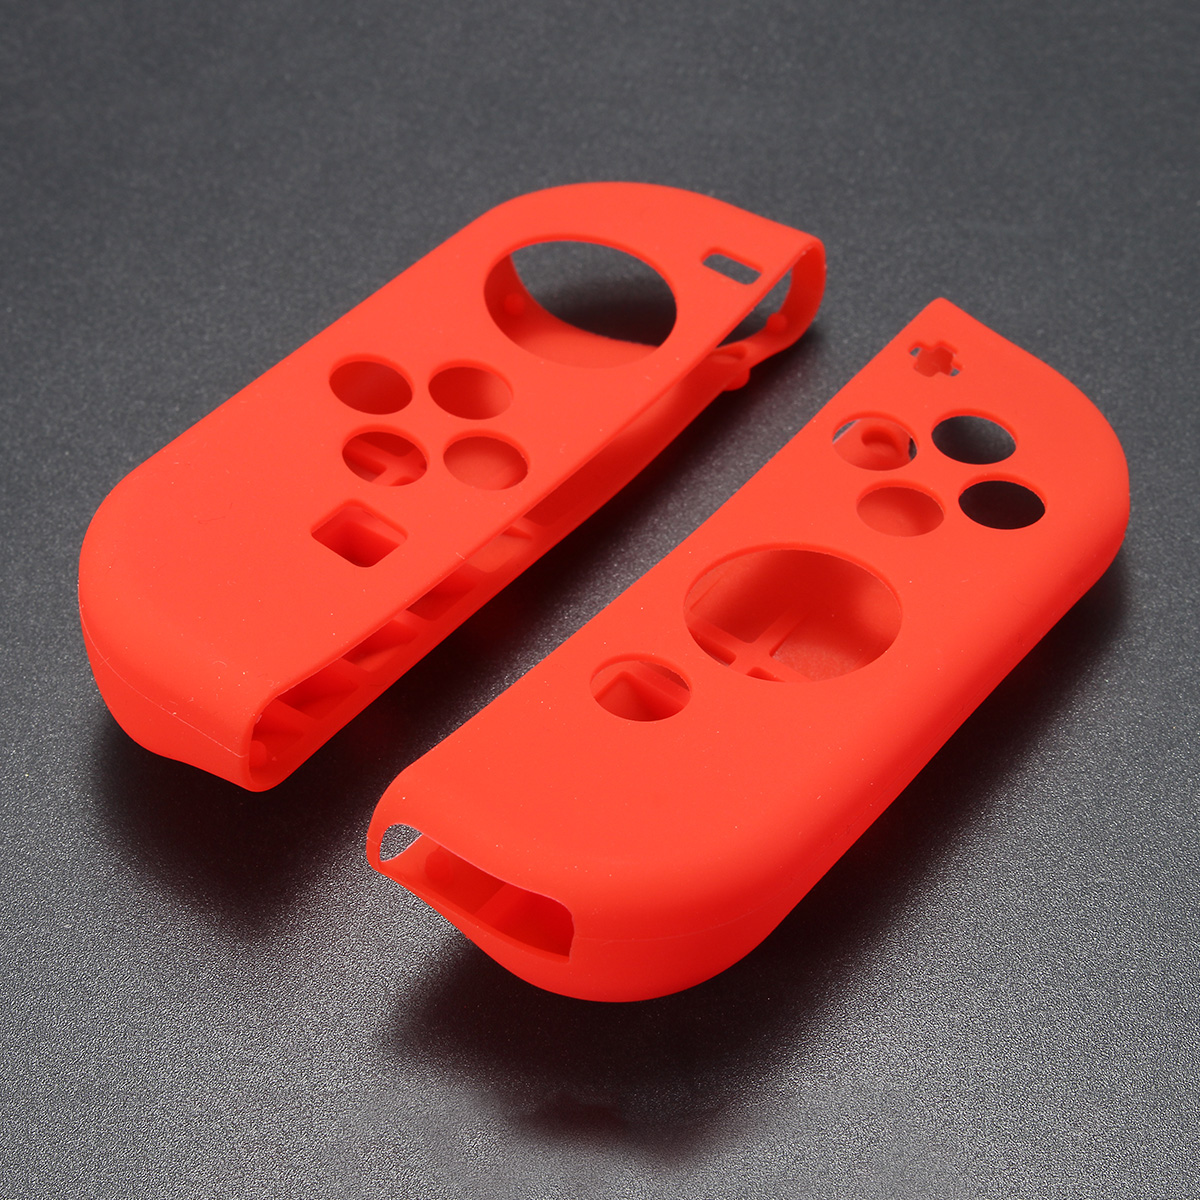 Silicon Case Protective Impact Resistant Rubber Skin Cover For Nintendo Switch Joy-Con Controller 76